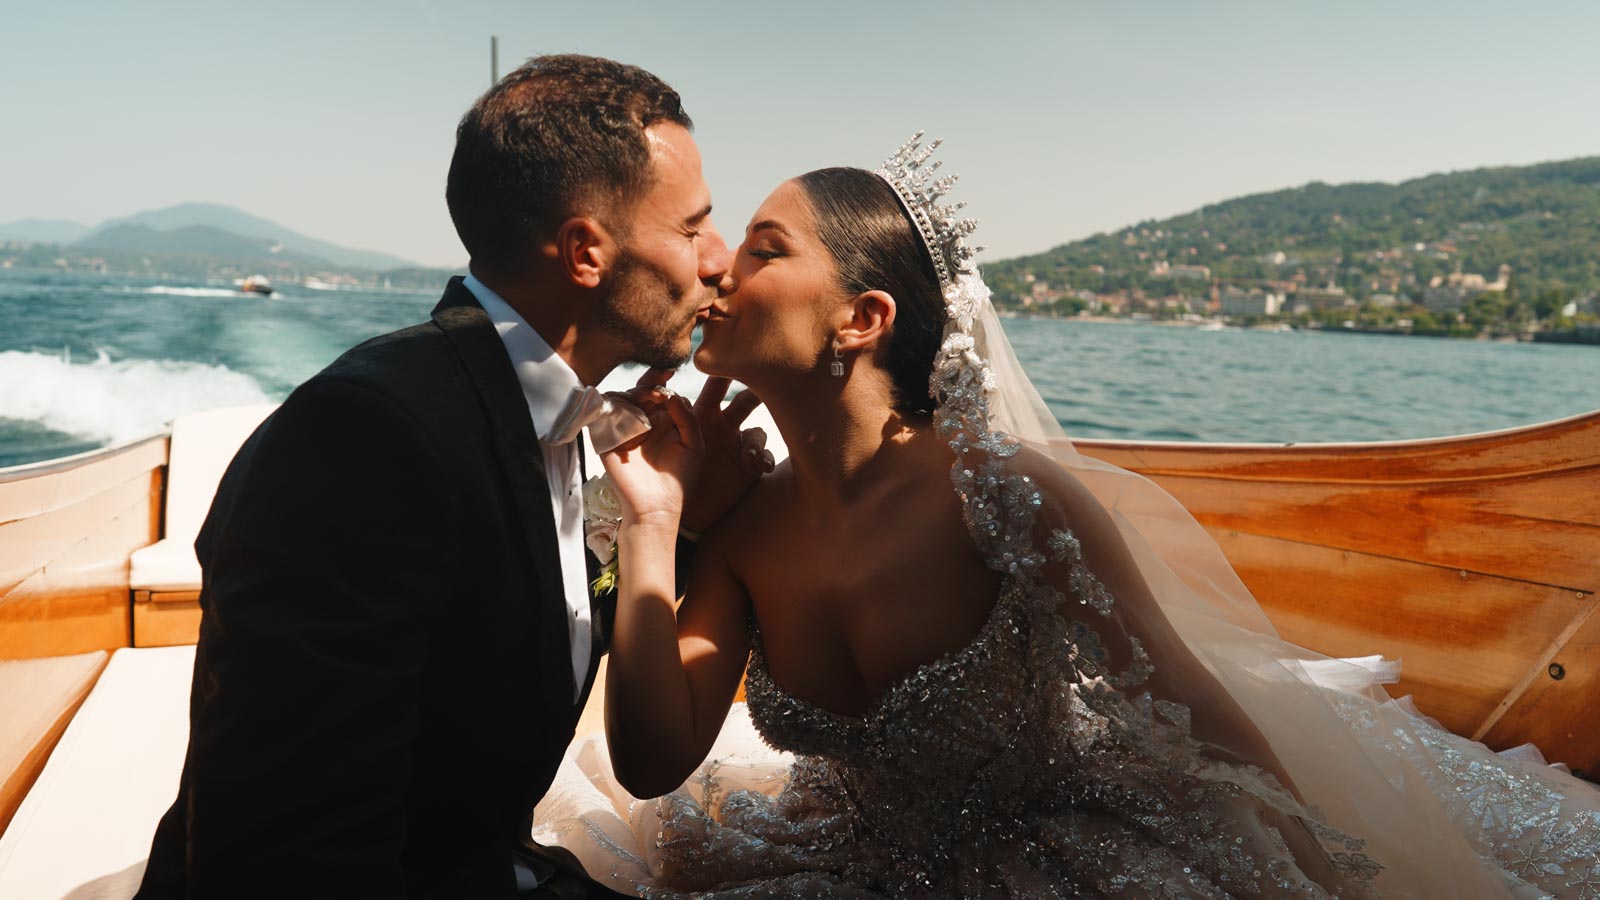 weddingvideo-italy-lago-maggiore